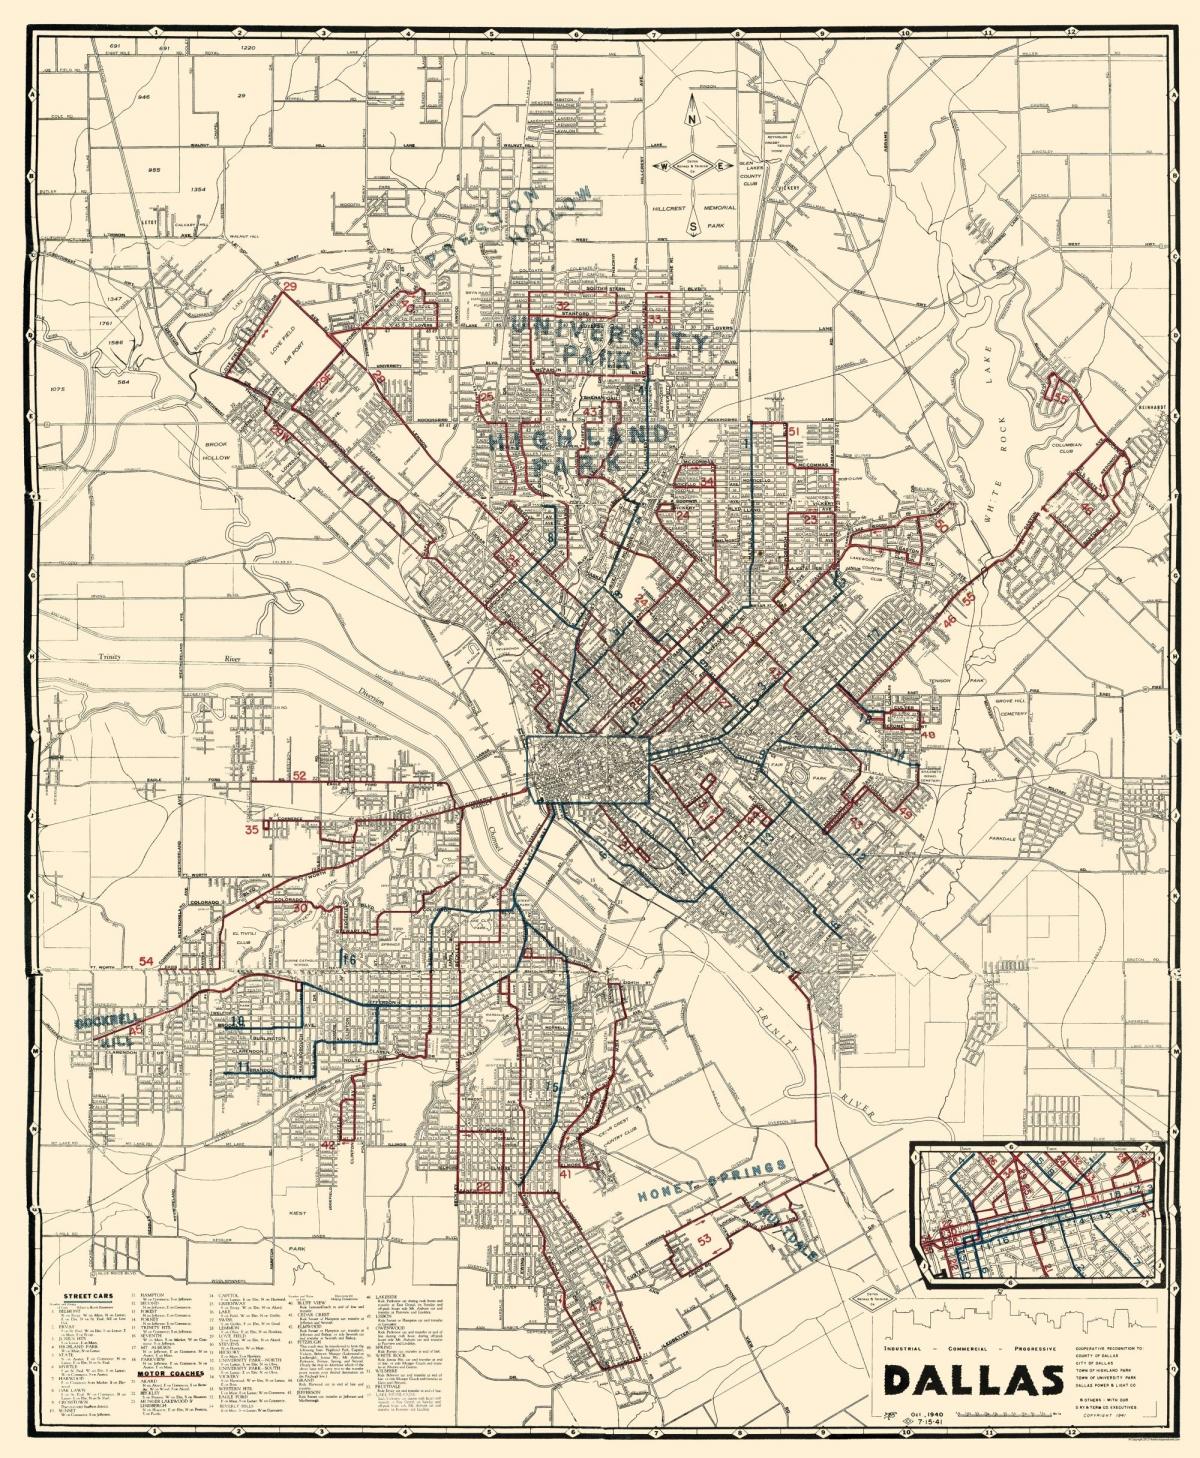 Dallas historische kaart